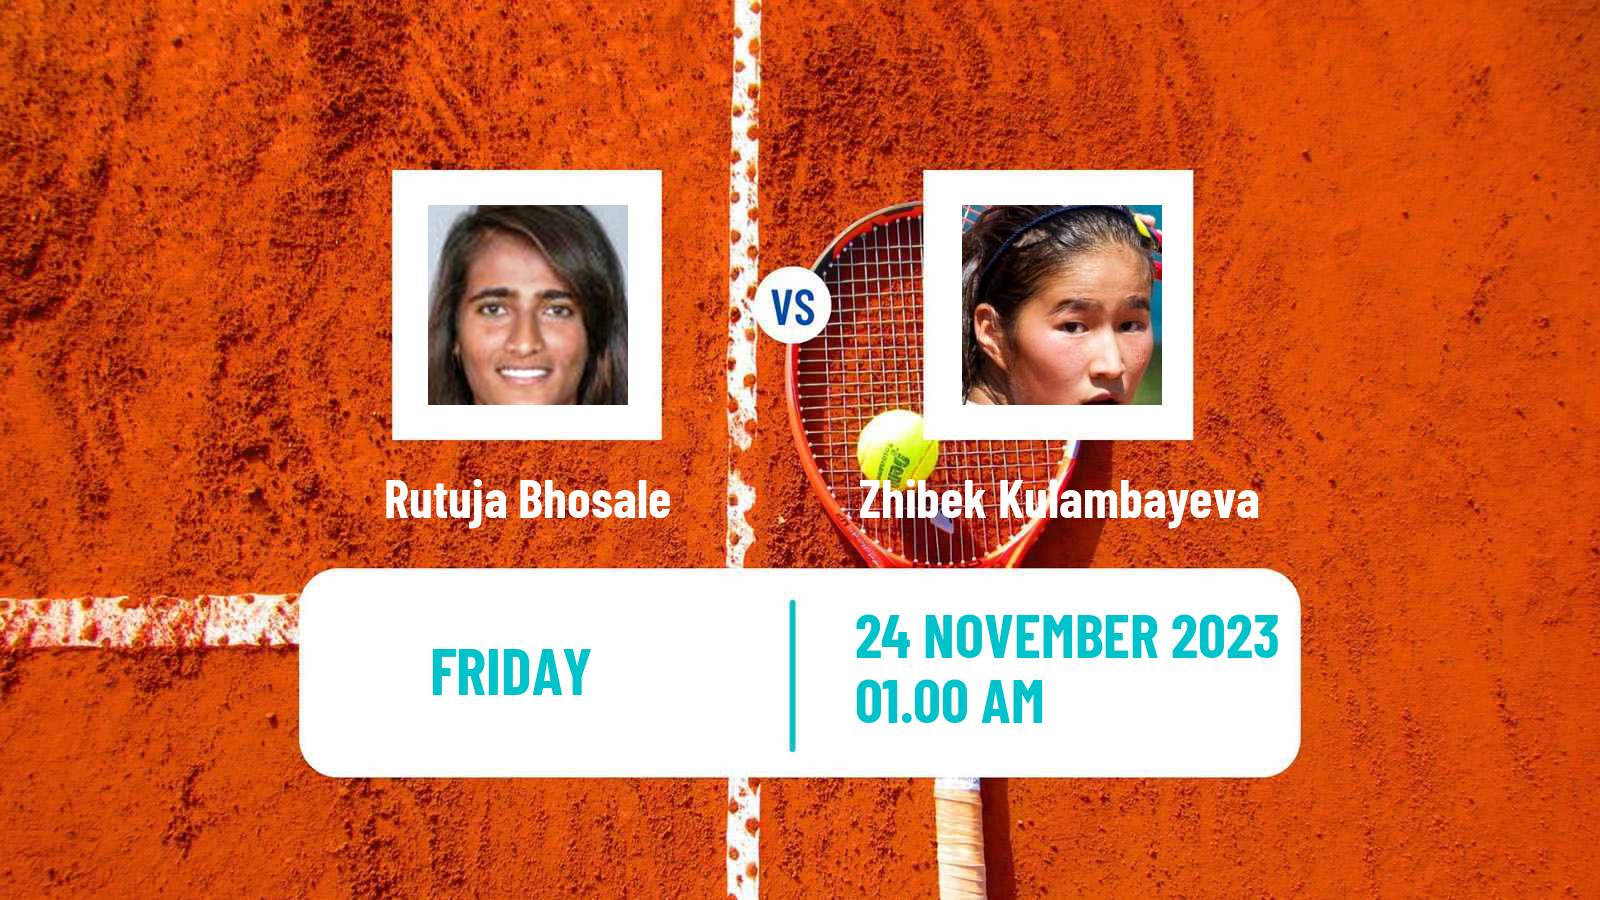 Tennis ITF W25 Bengaluru 2 Women Rutuja Bhosale - Zhibek Kulambayeva